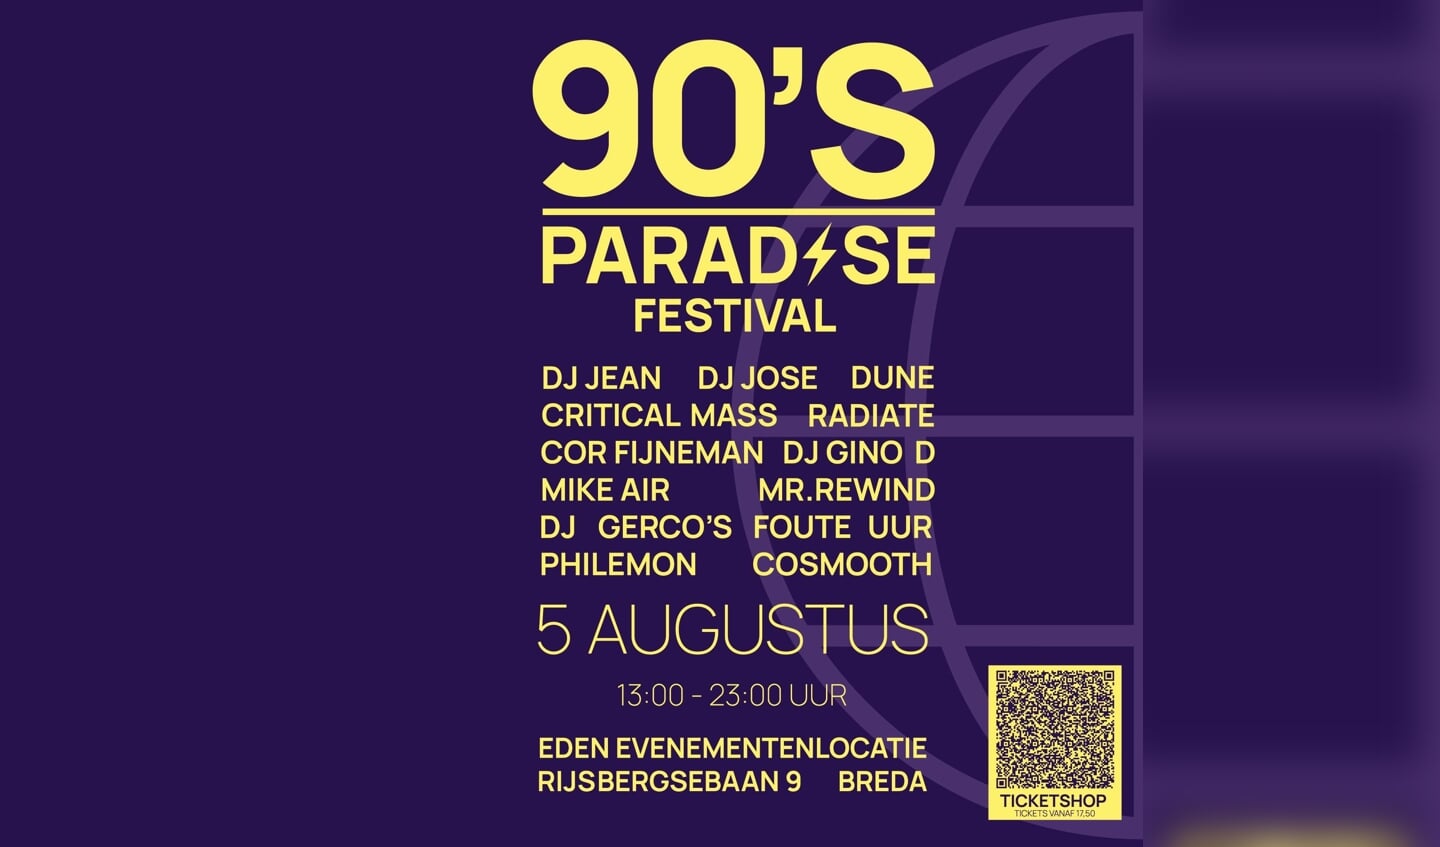 90's Paradise Festival